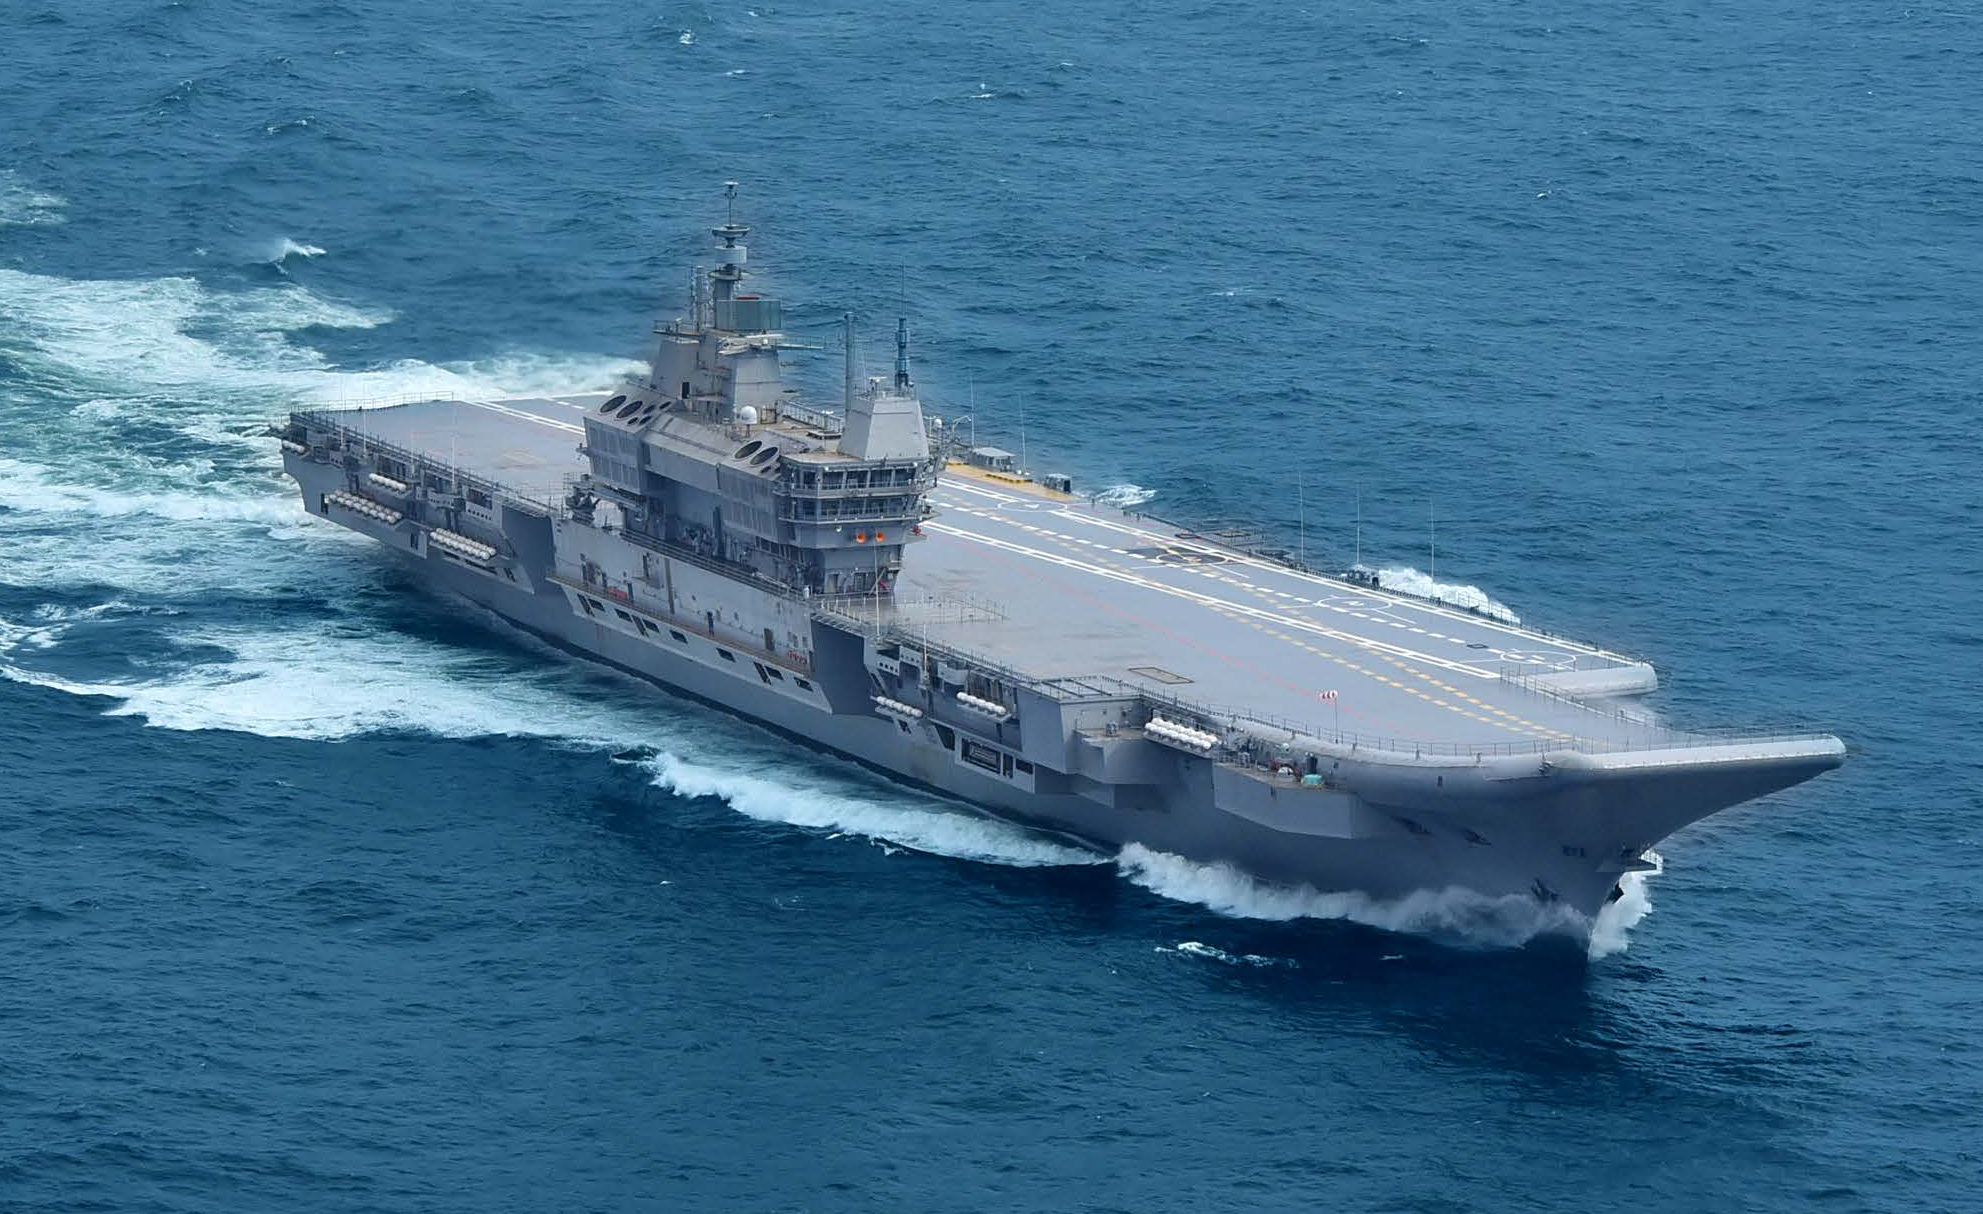 IAC1 Vikrant during sea trials cropped